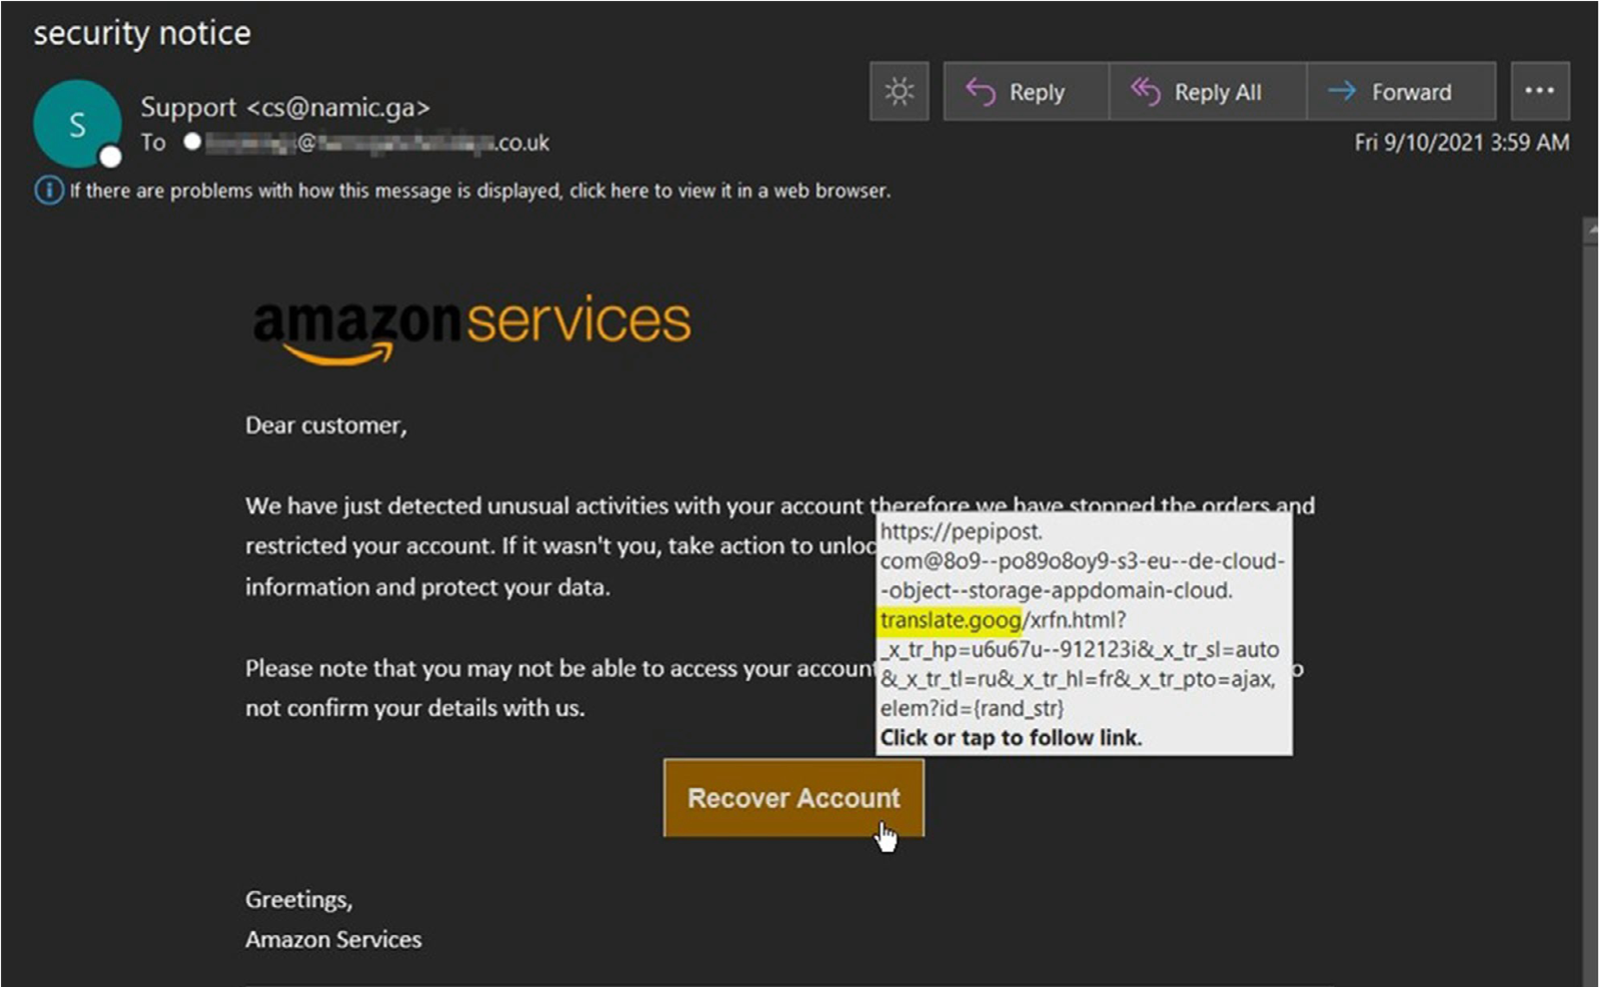 Amazon services phishing email